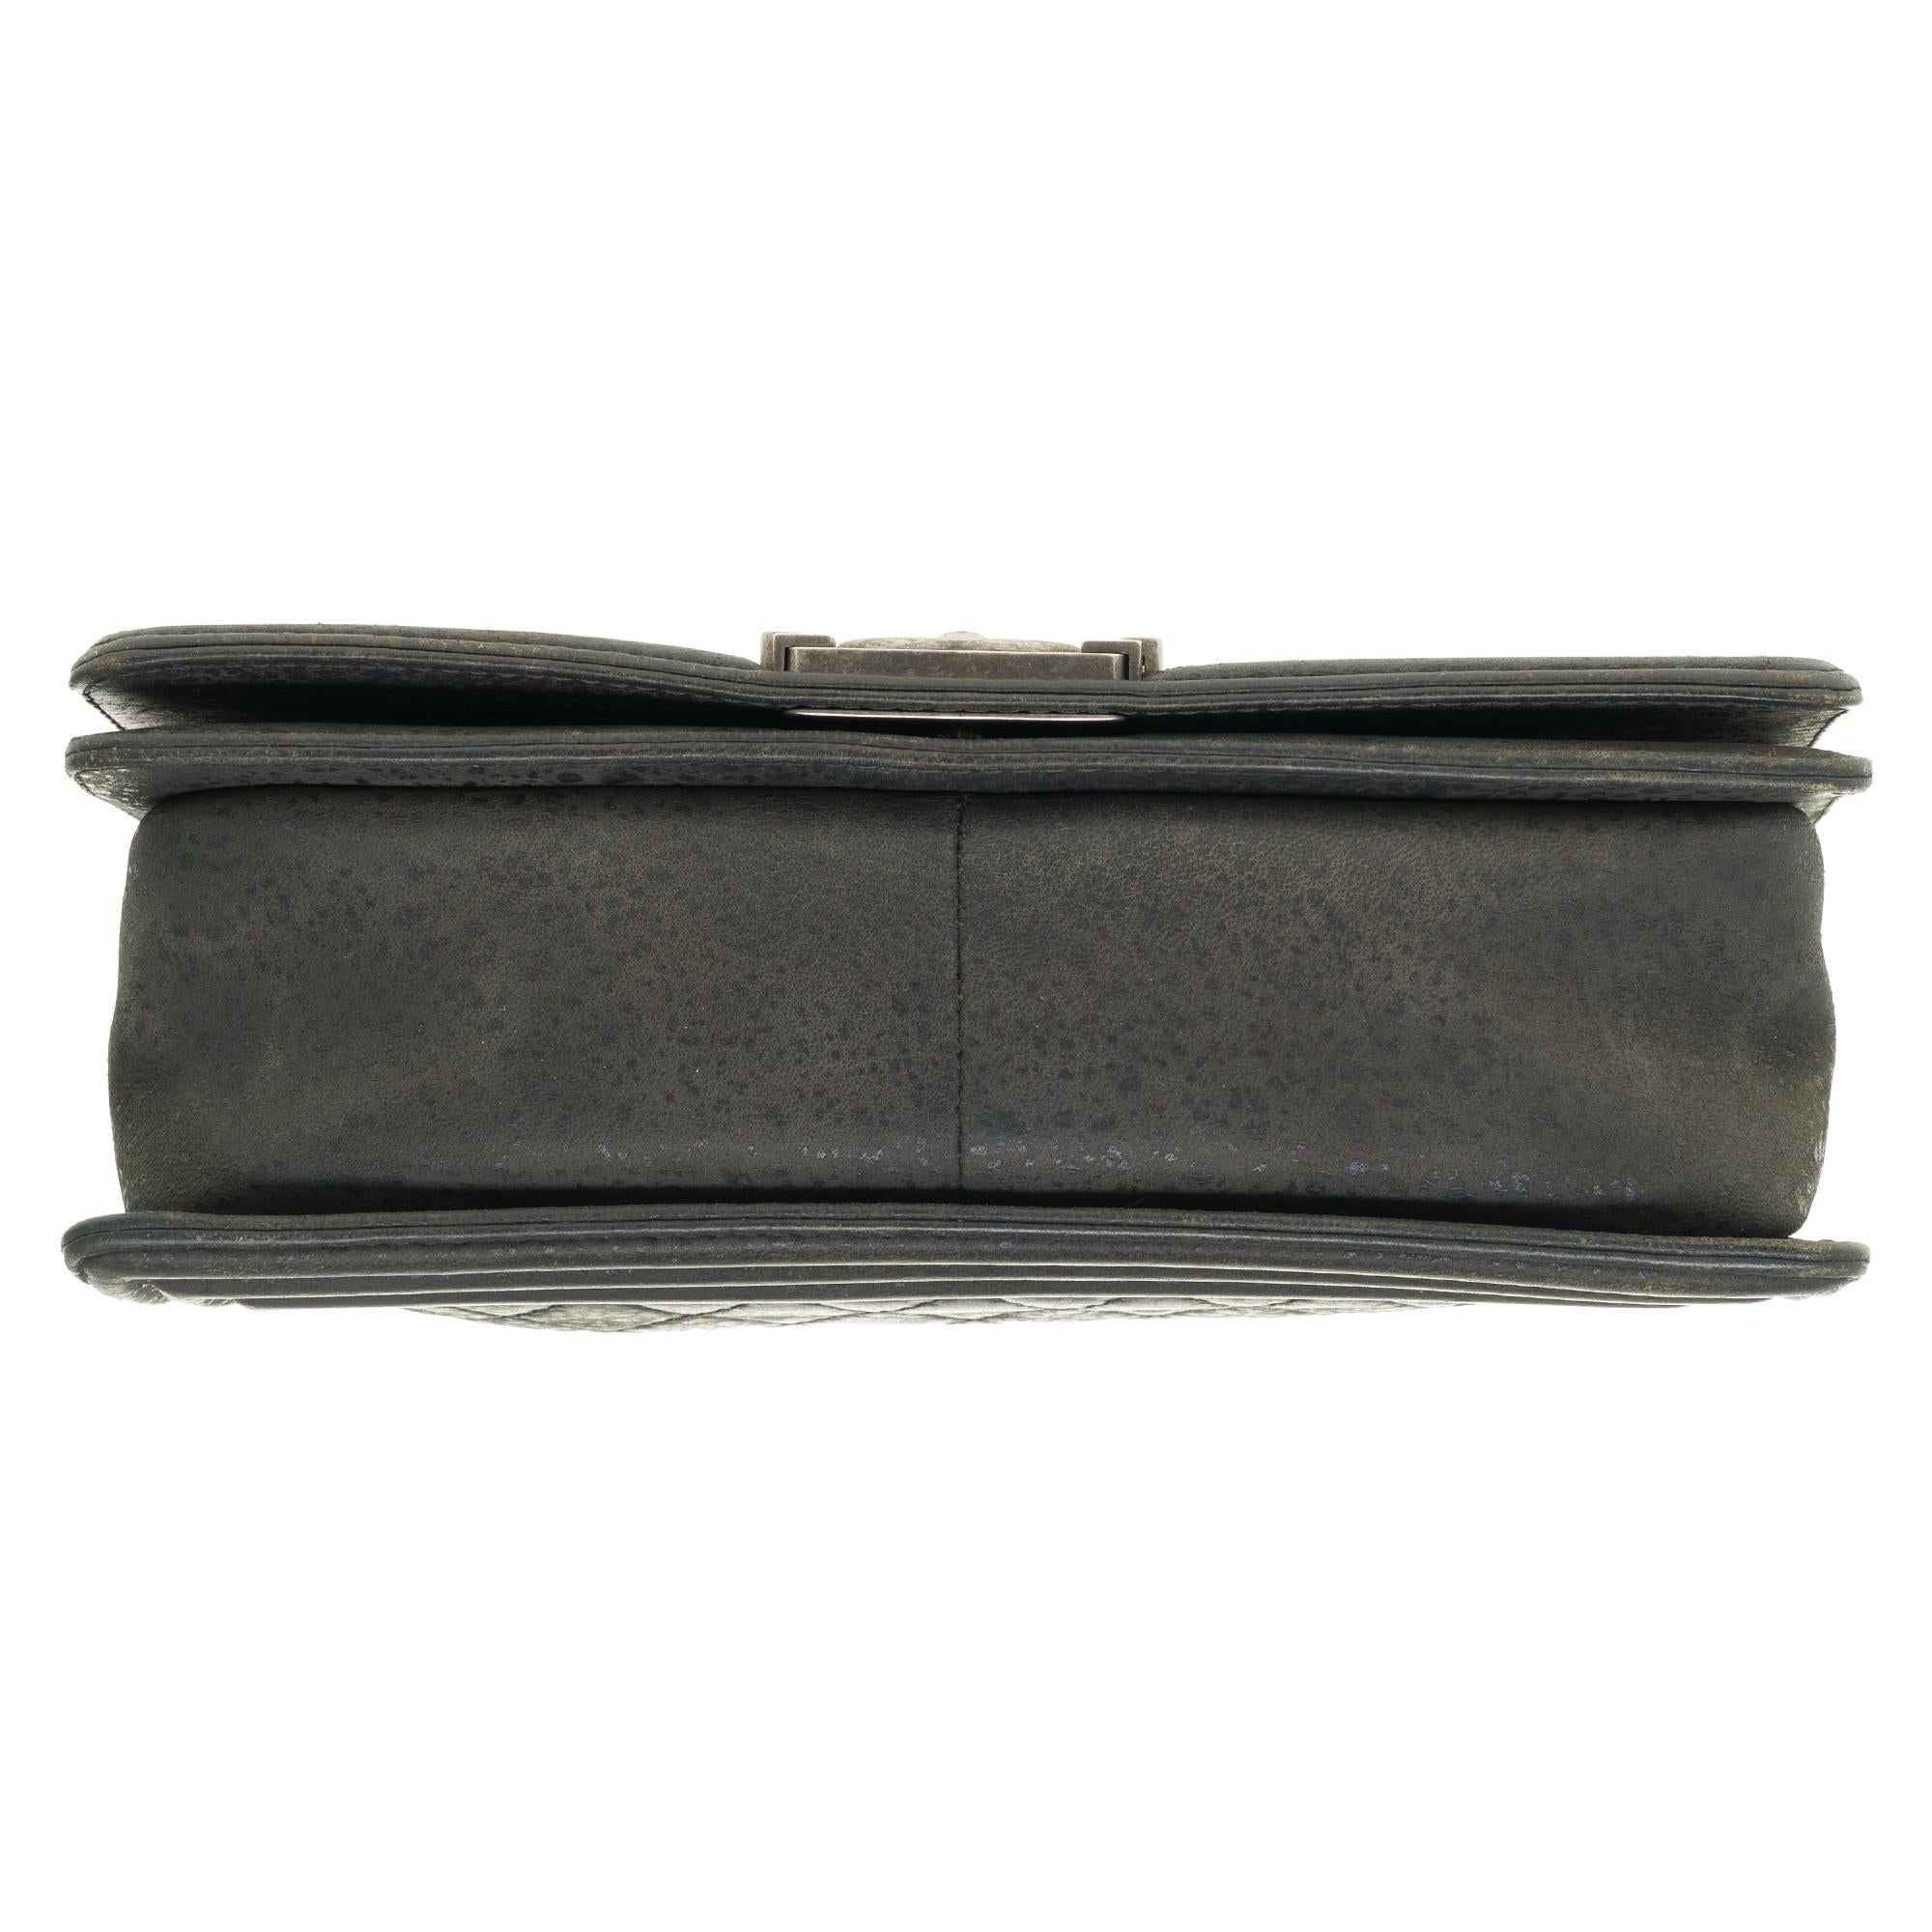 Chanel Boy Old medium(25cm) shoulder bag in grey aged quilted leather, SHW ! 4